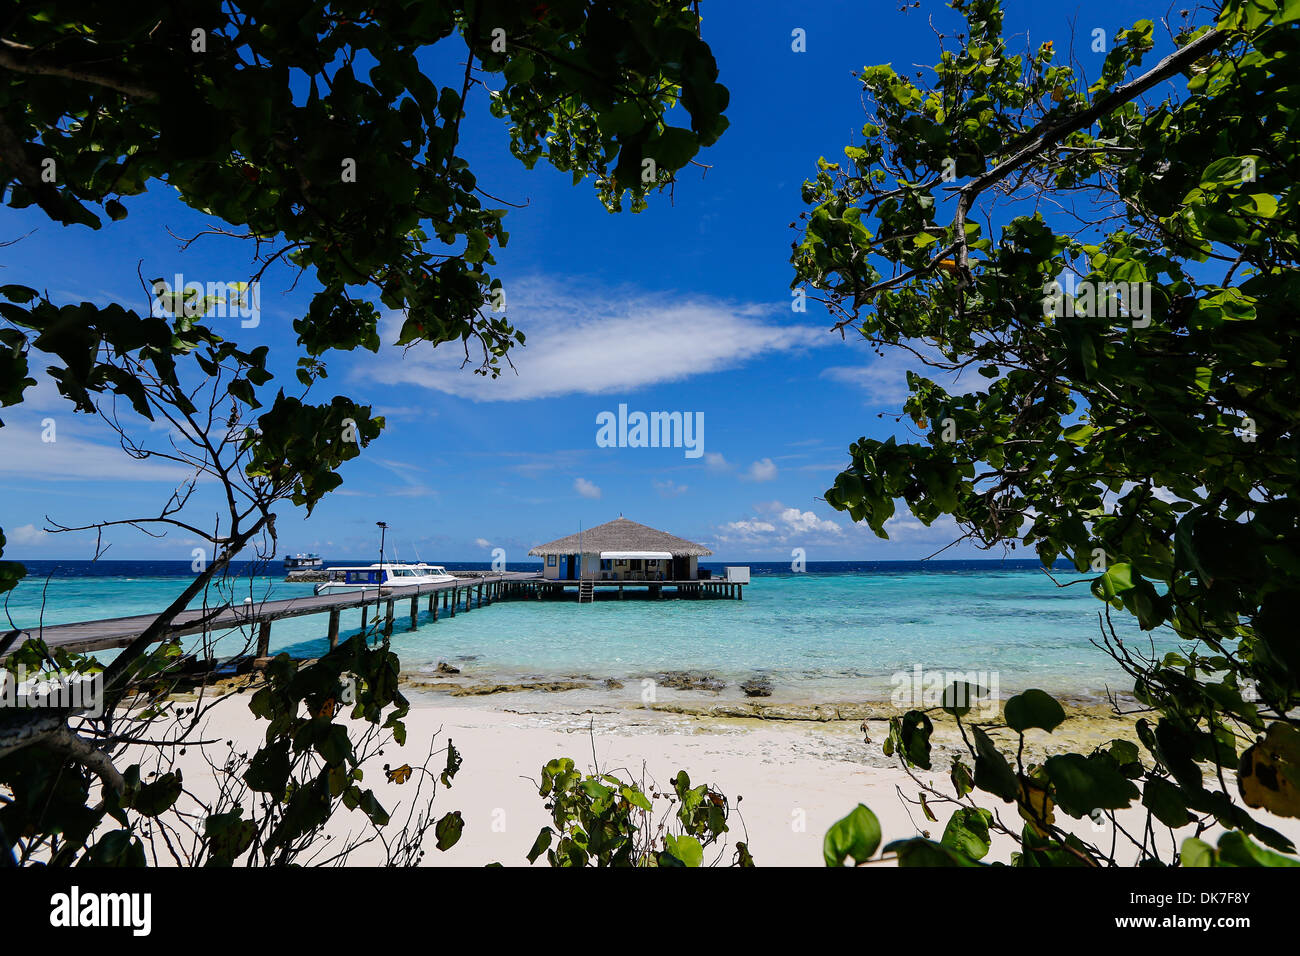 bounty island in the maldives, looks like paradise Stock Photo